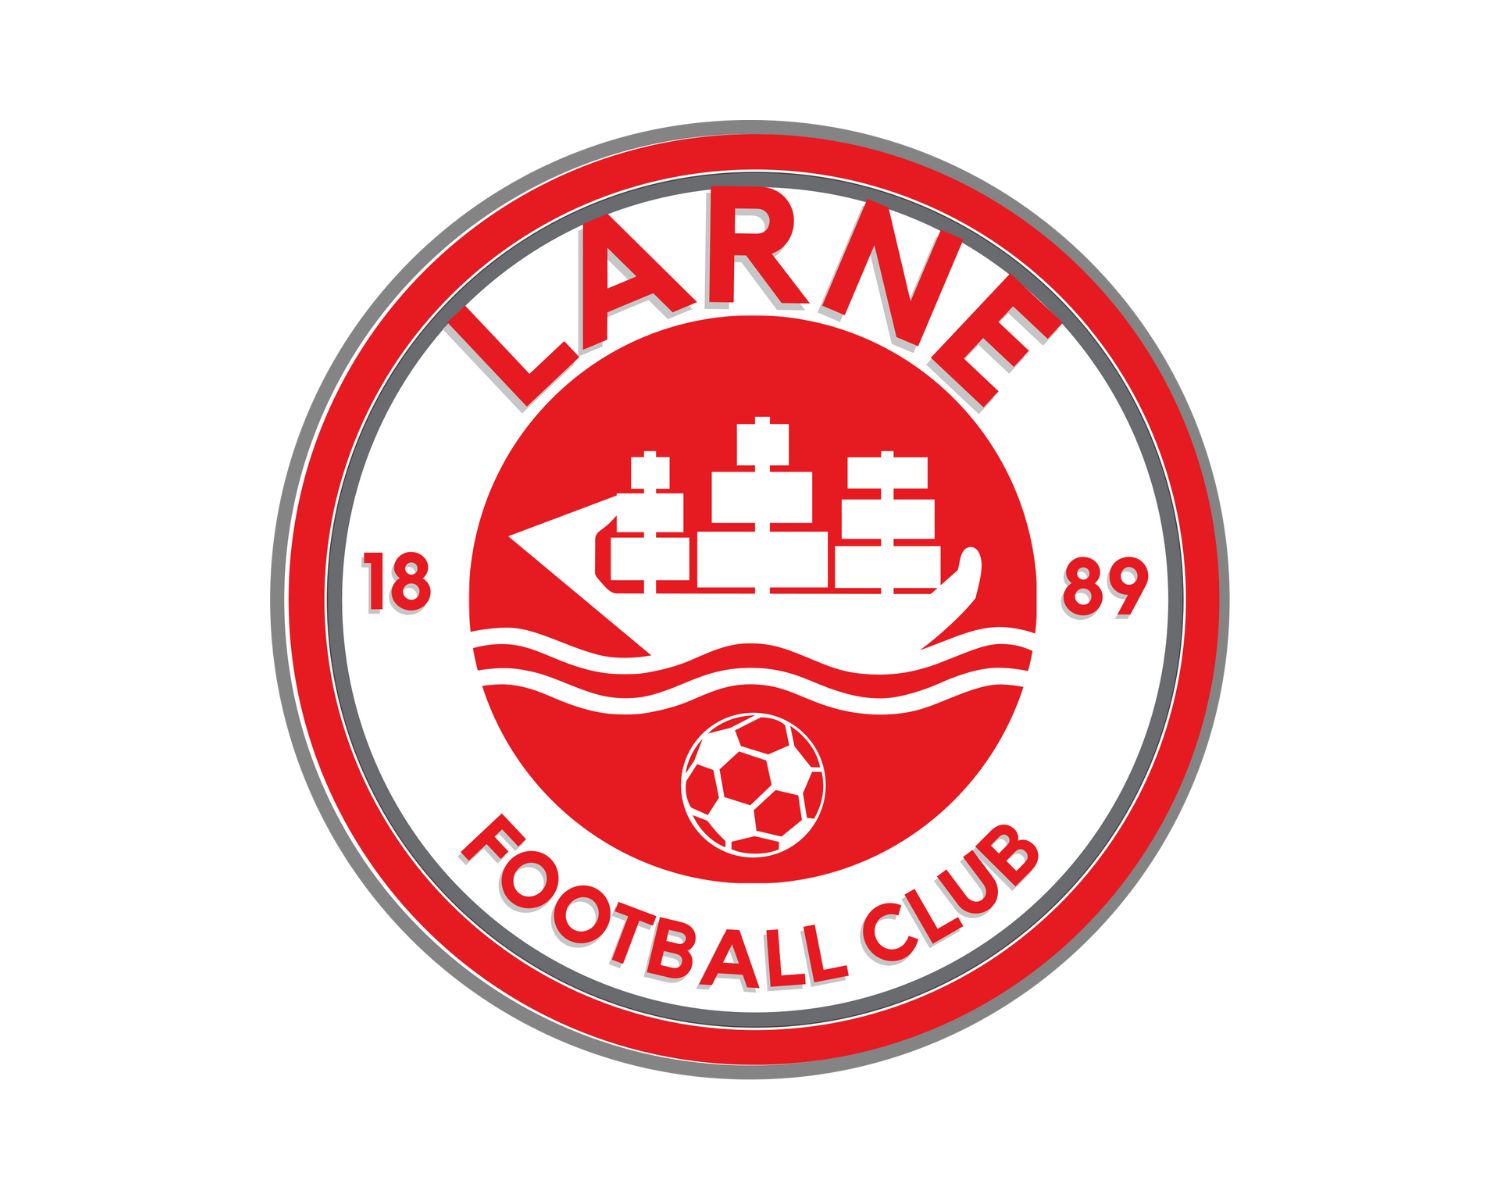 larne-fc-17-football-club-facts